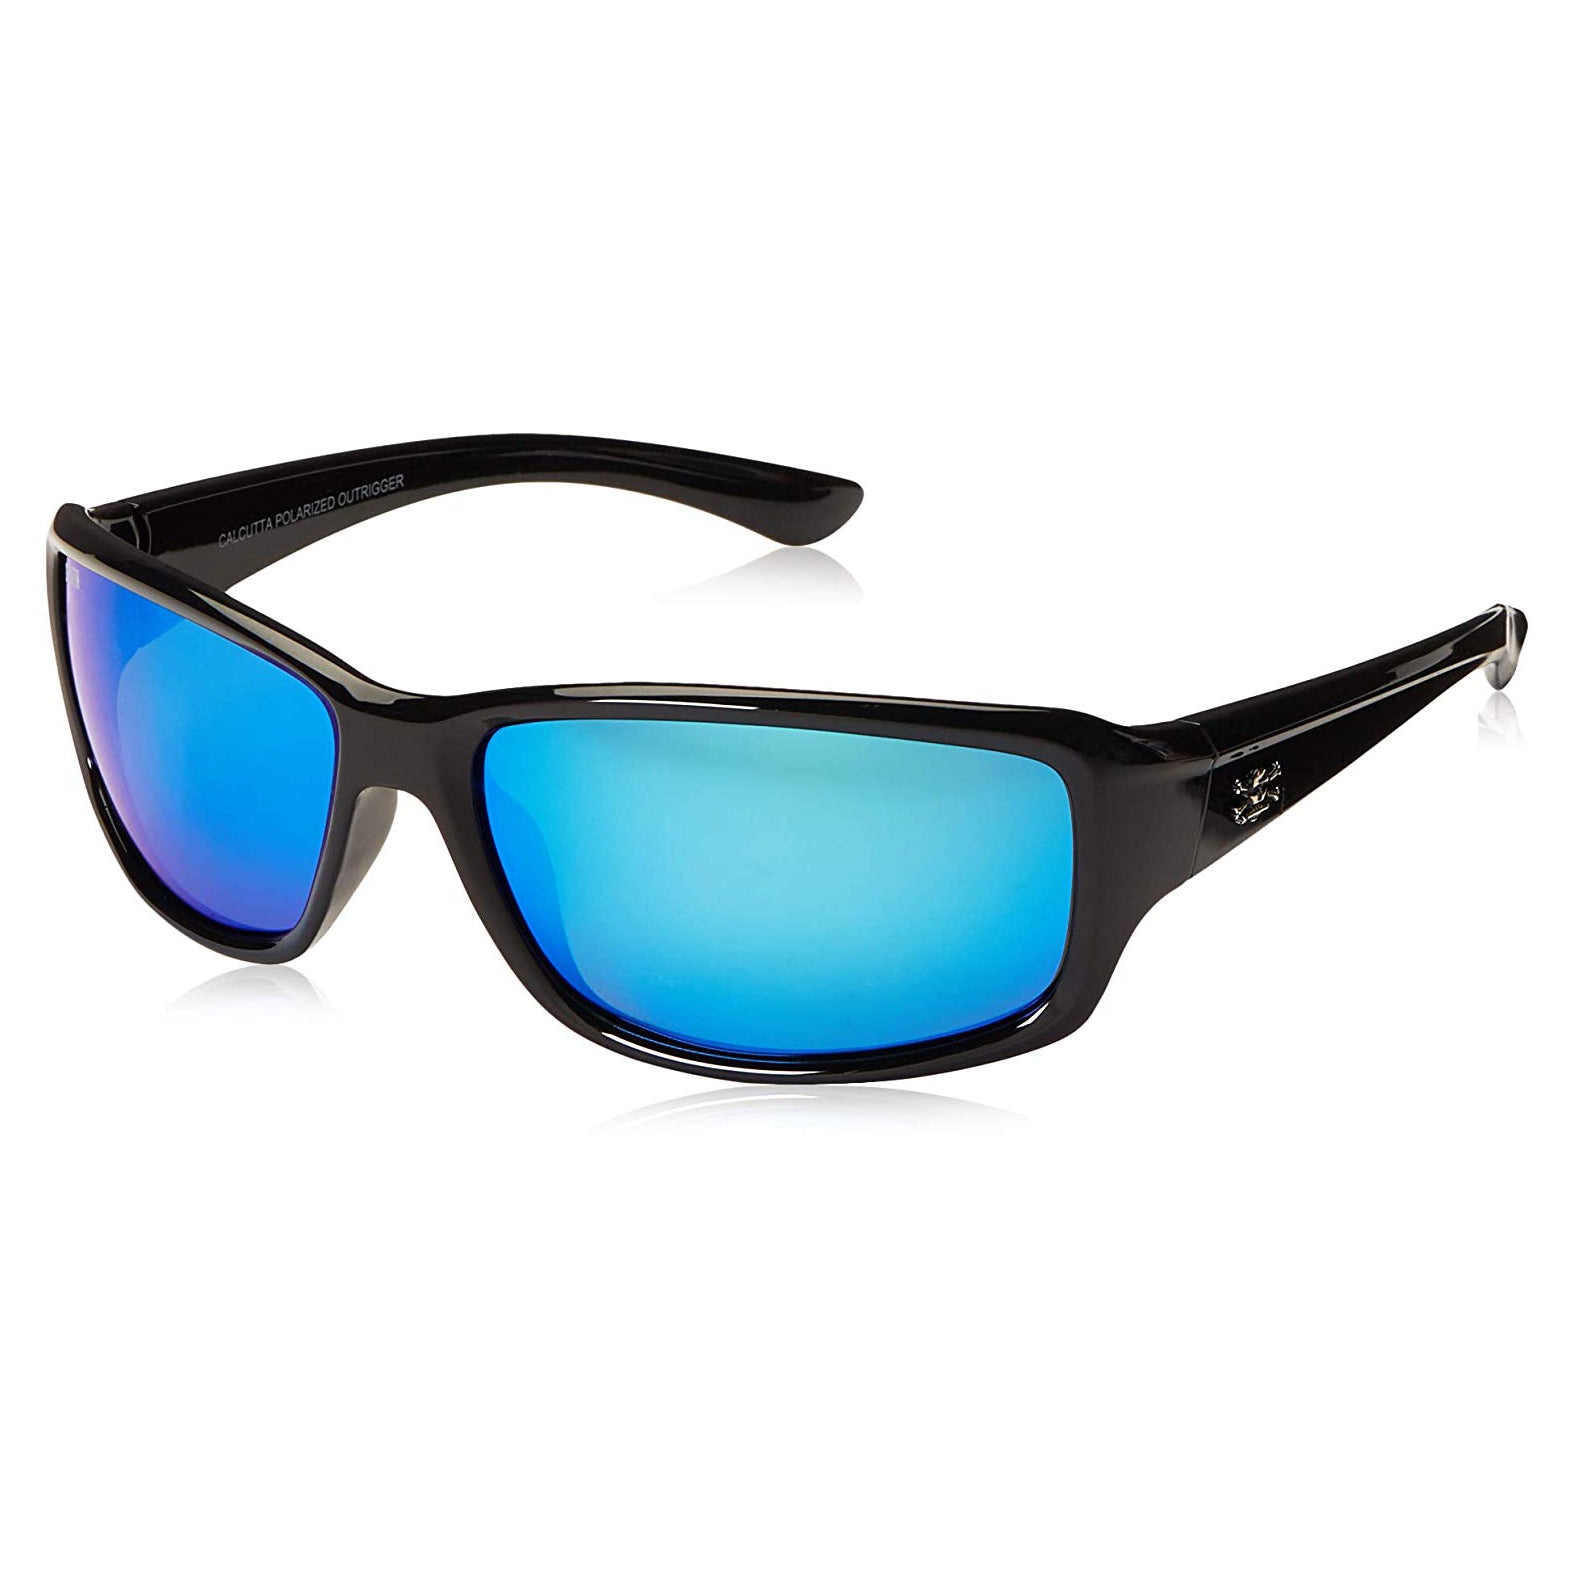 New Authentic Calcutta Outrigger Sunglasses Black Frame/ Polarized